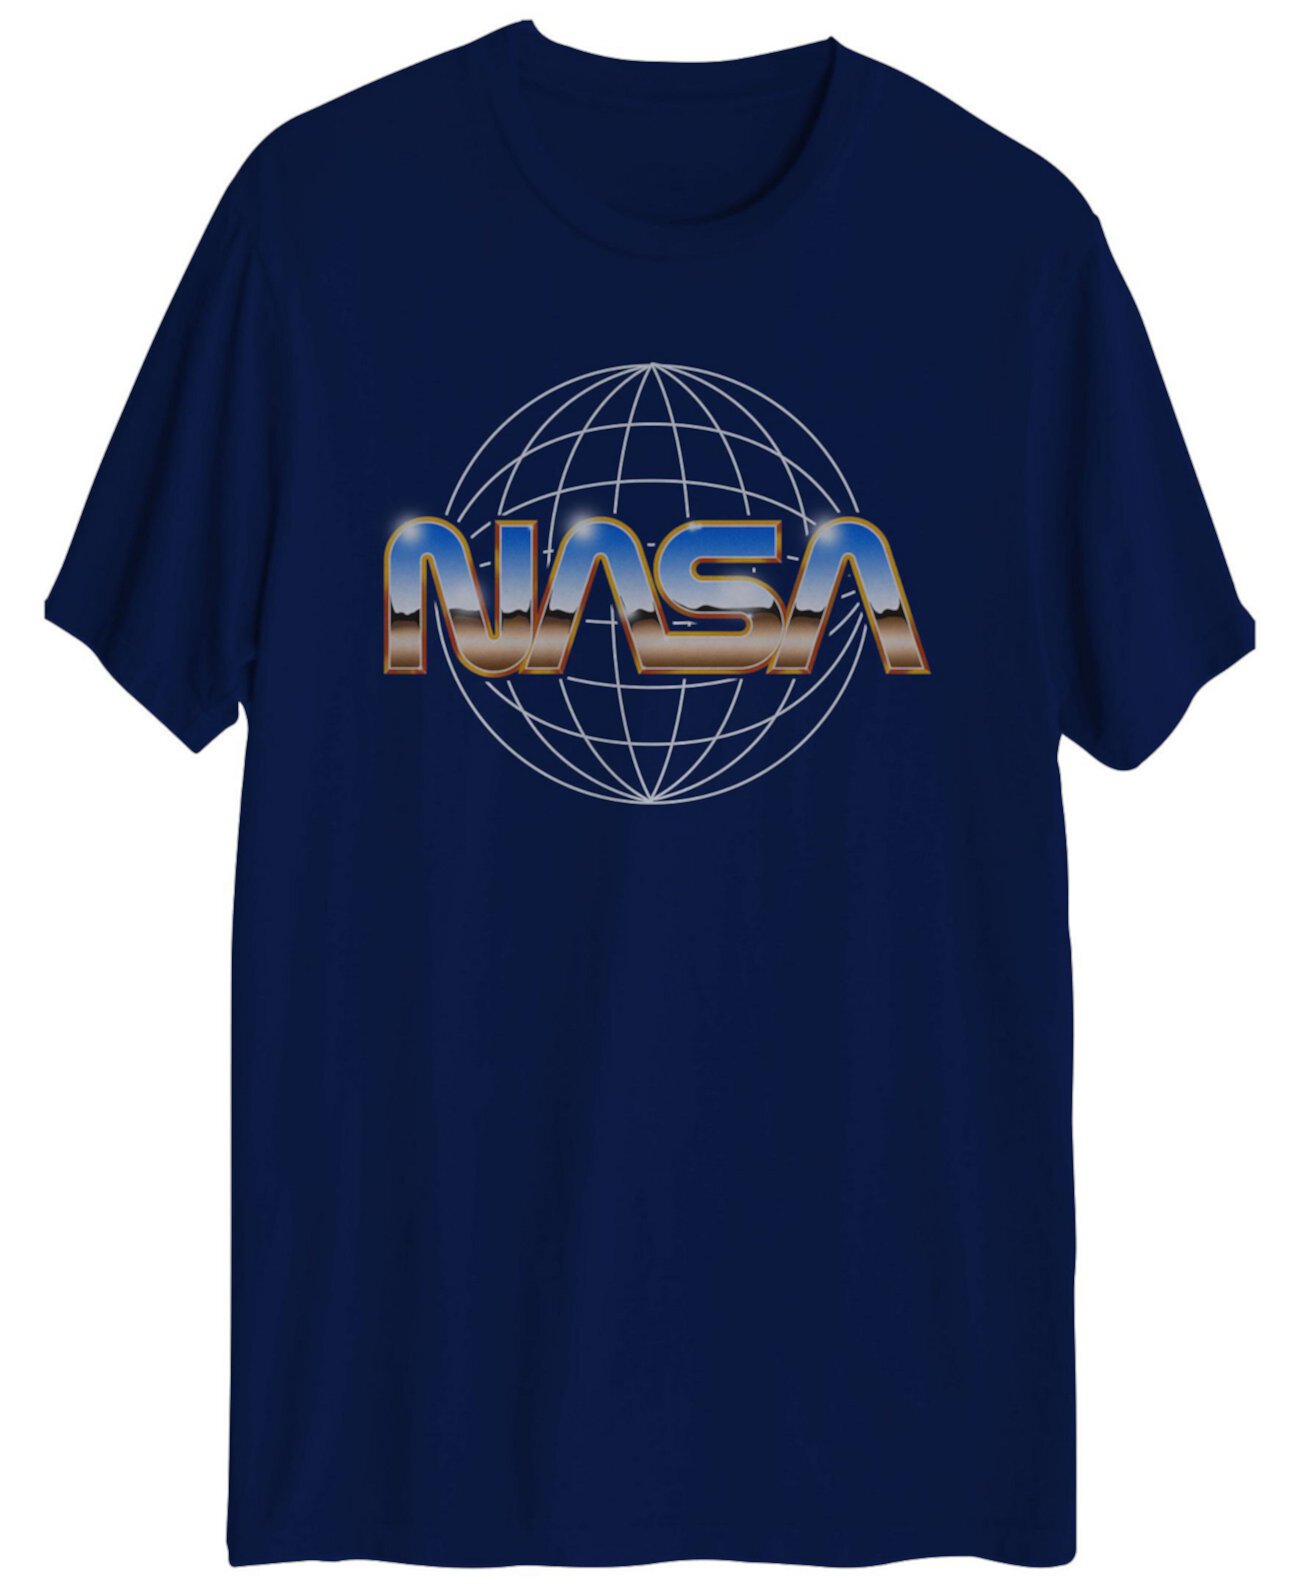 Мужская футболка с коротким рукавом и графикой с логотипом Nasa Chrome Hybrid